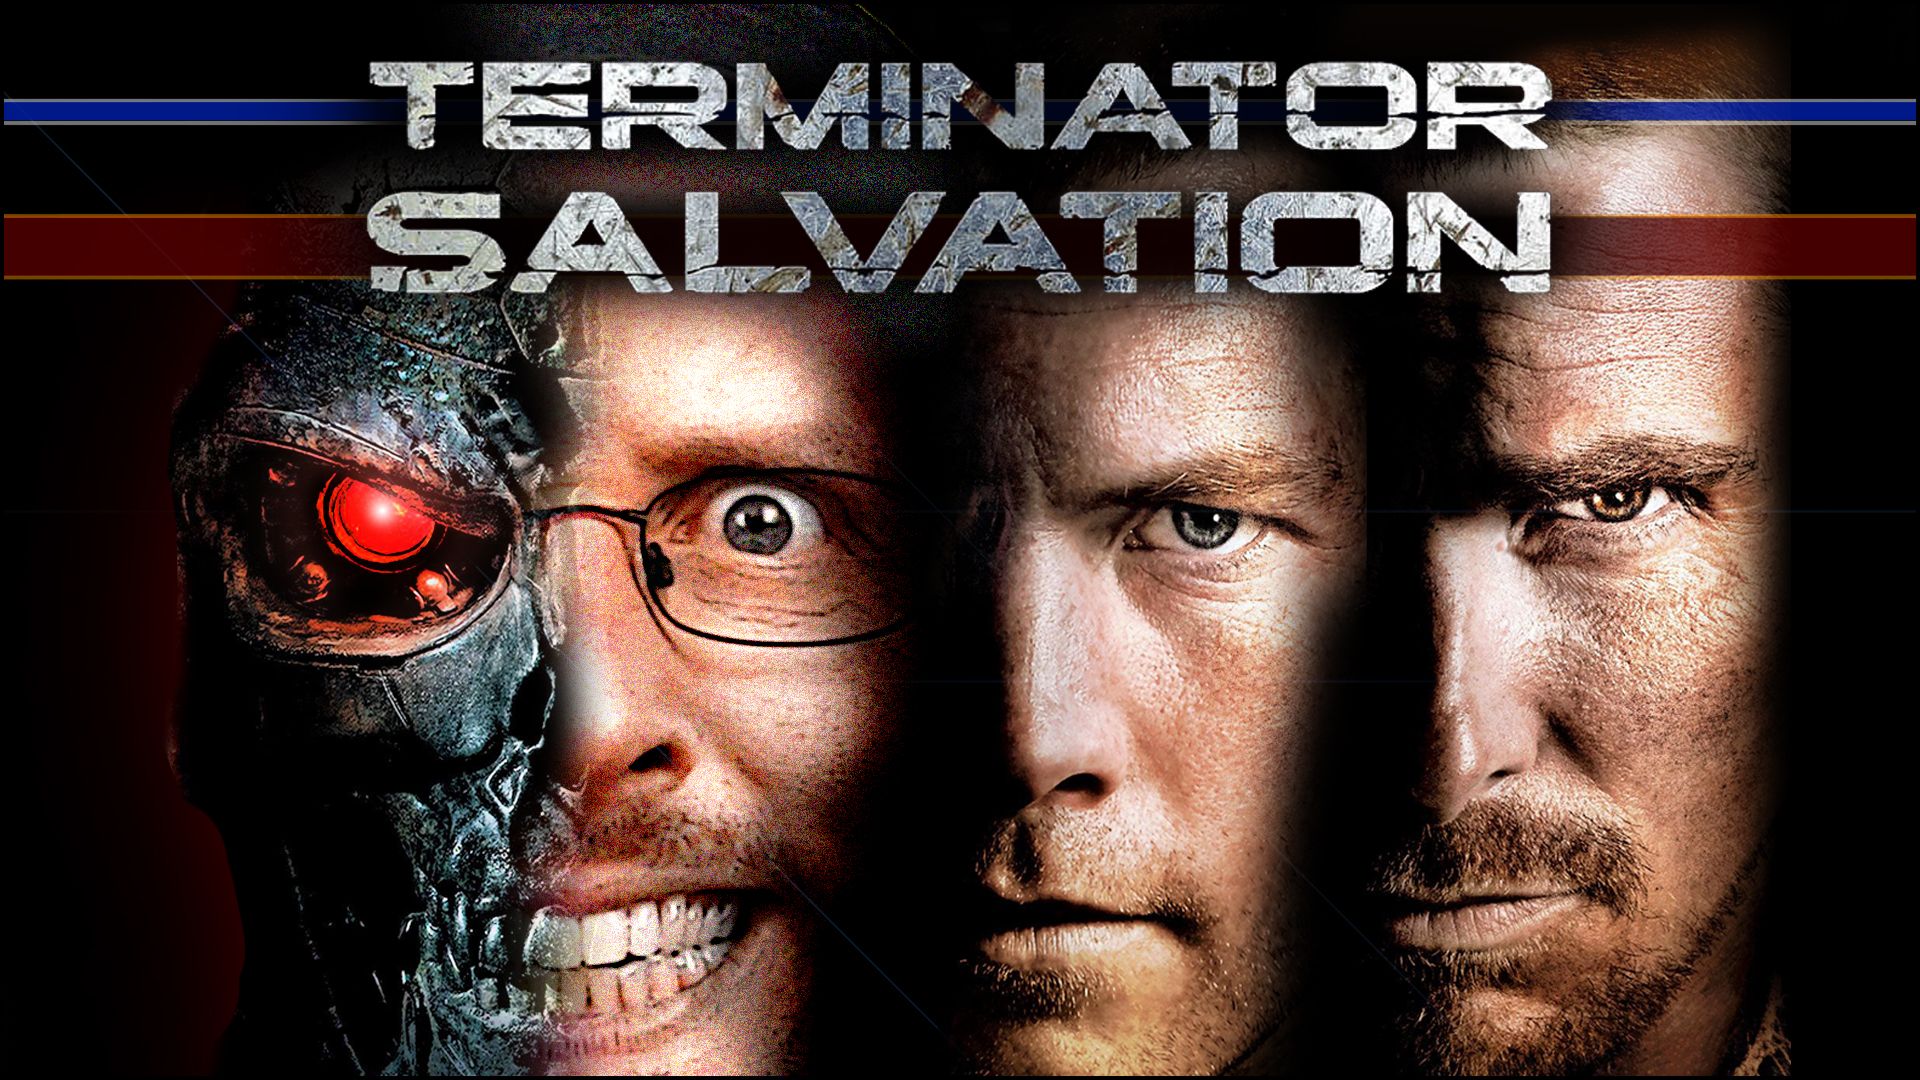 terminator salvation director